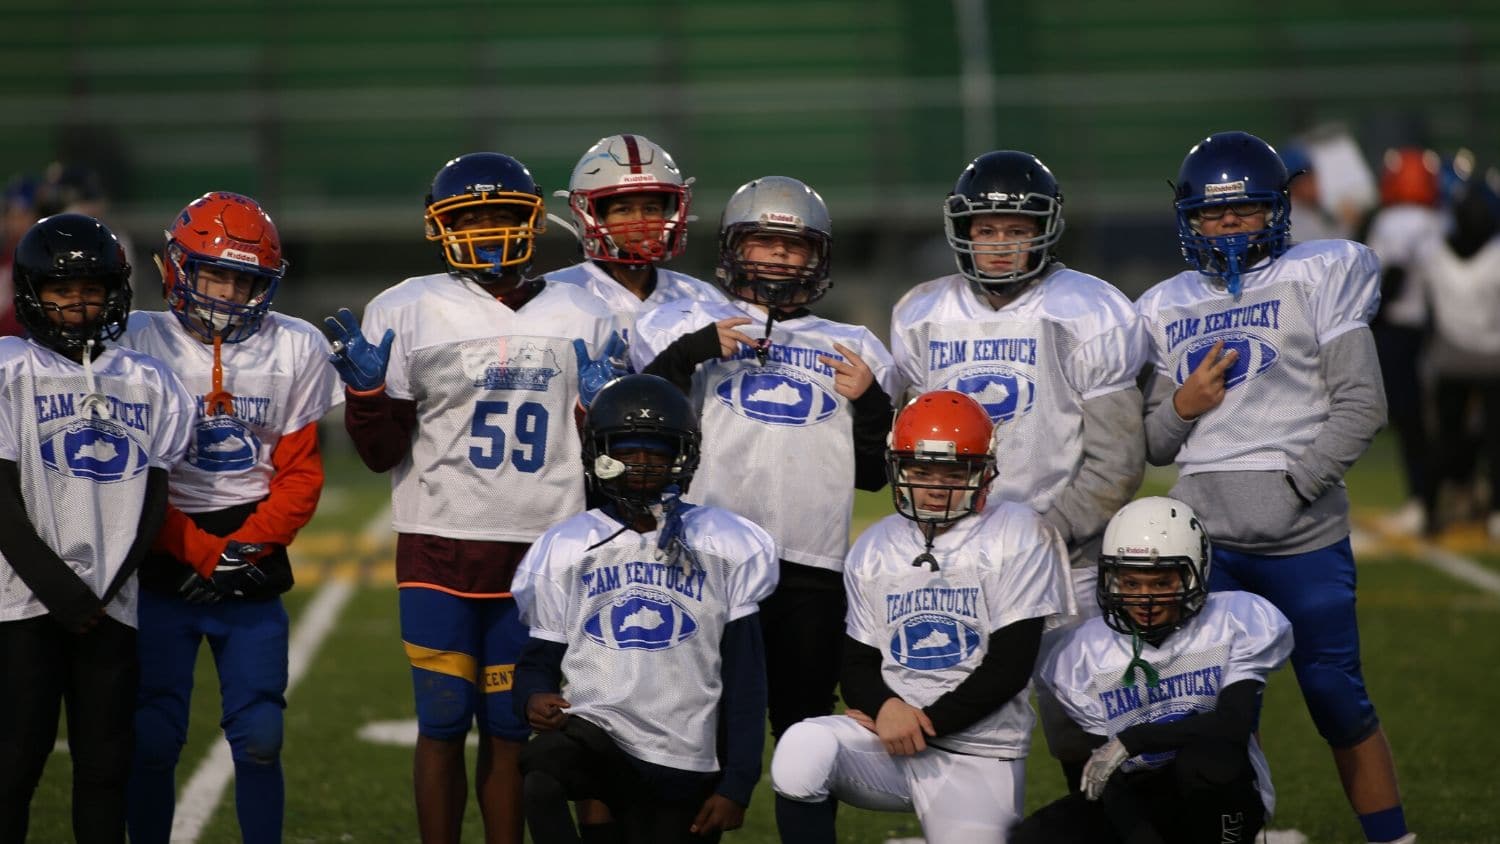 7th Grade Team KY Football Players